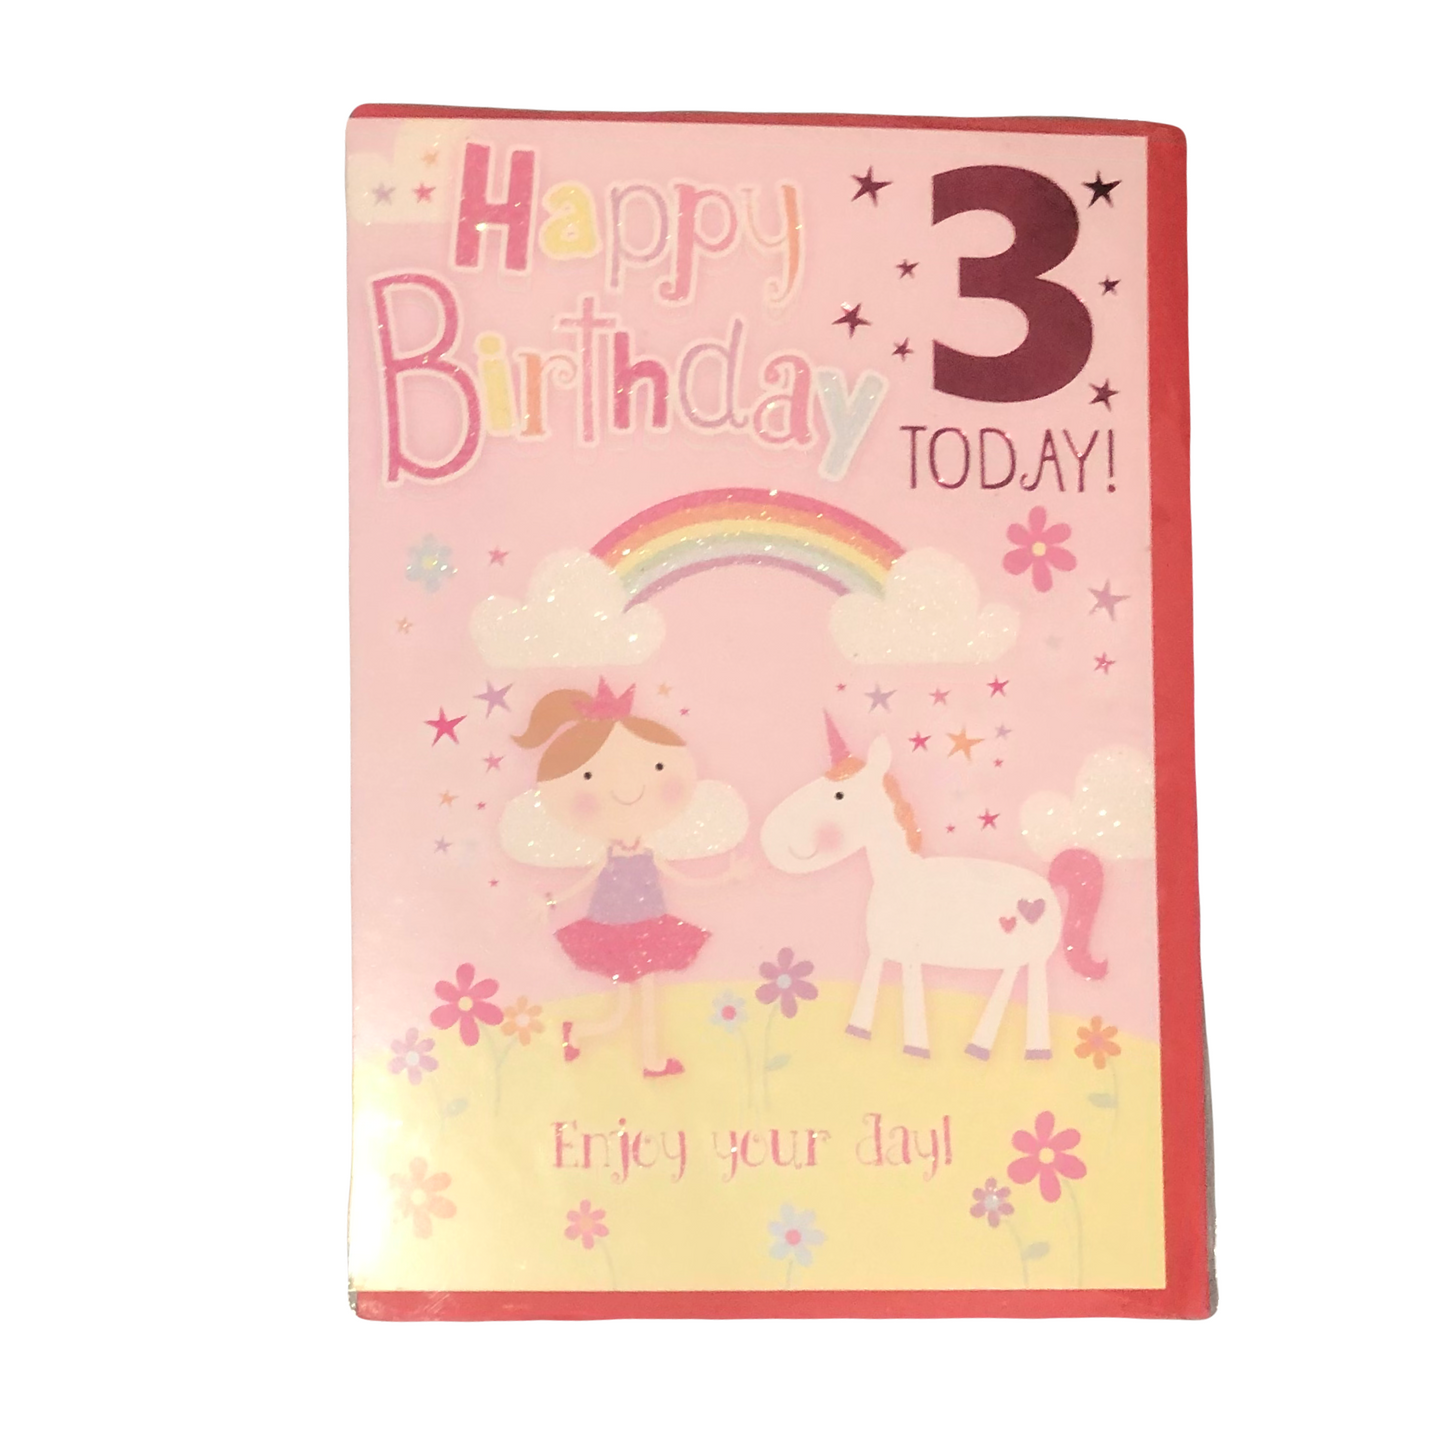 Happy Birthday 3 Today! Card